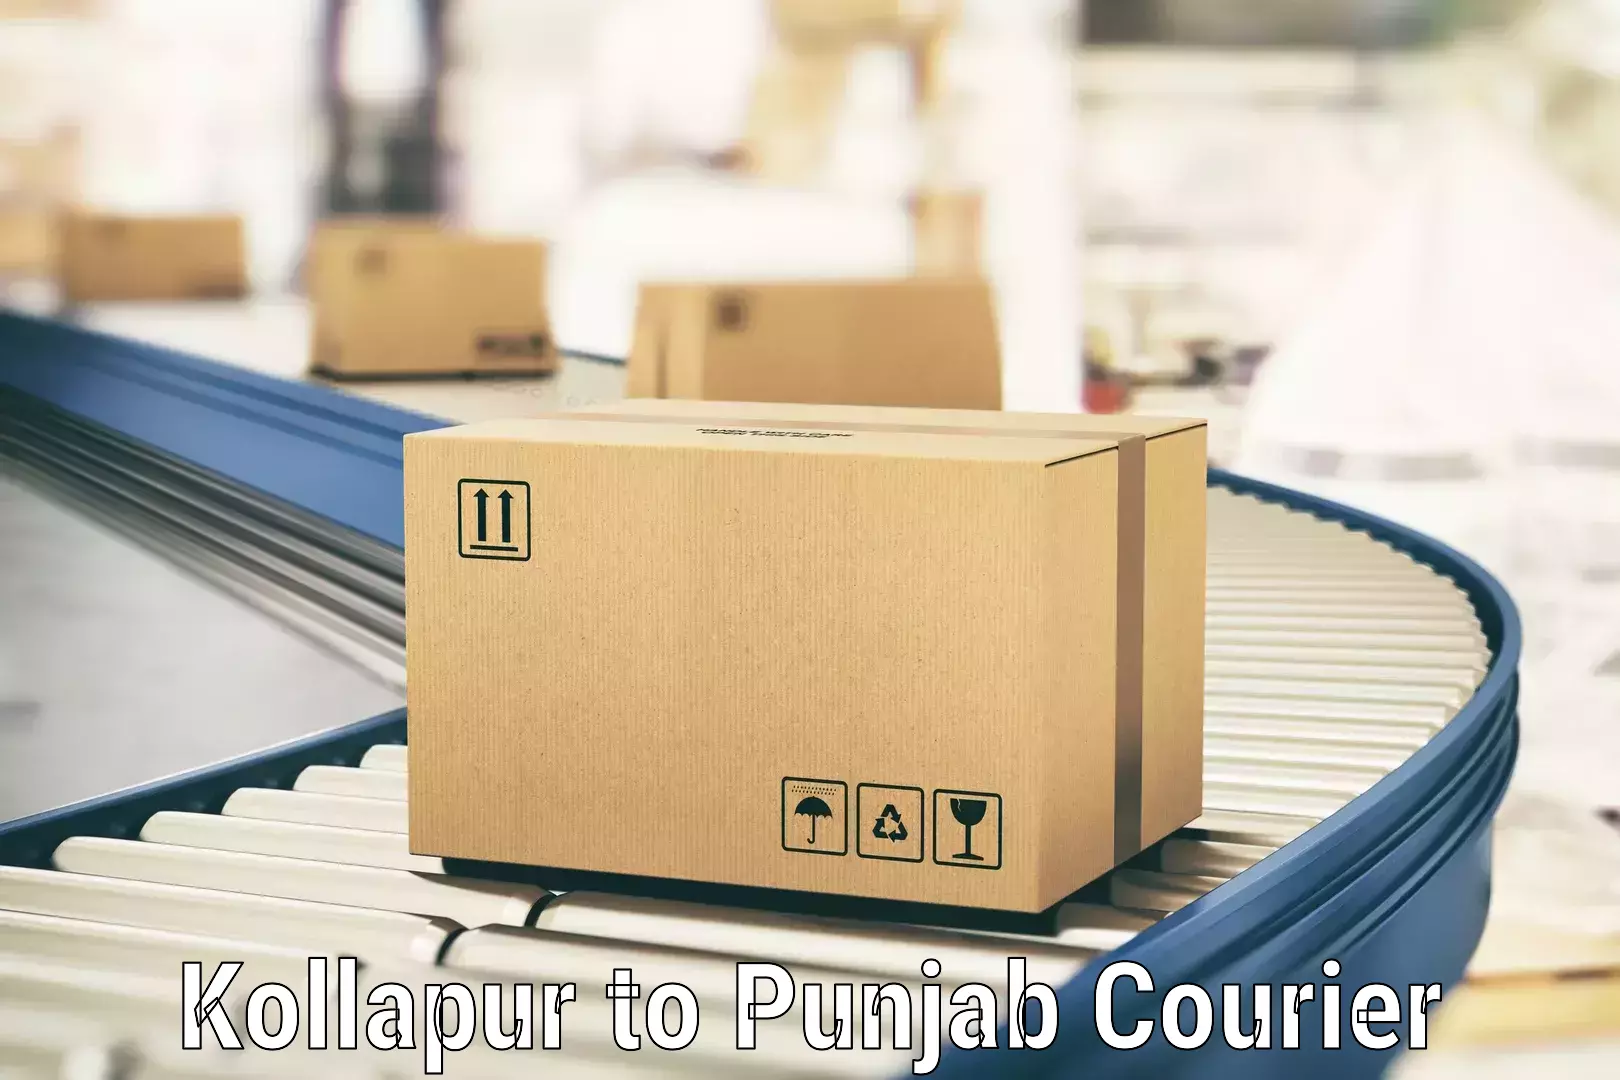 International parcel service Kollapur to Ropar